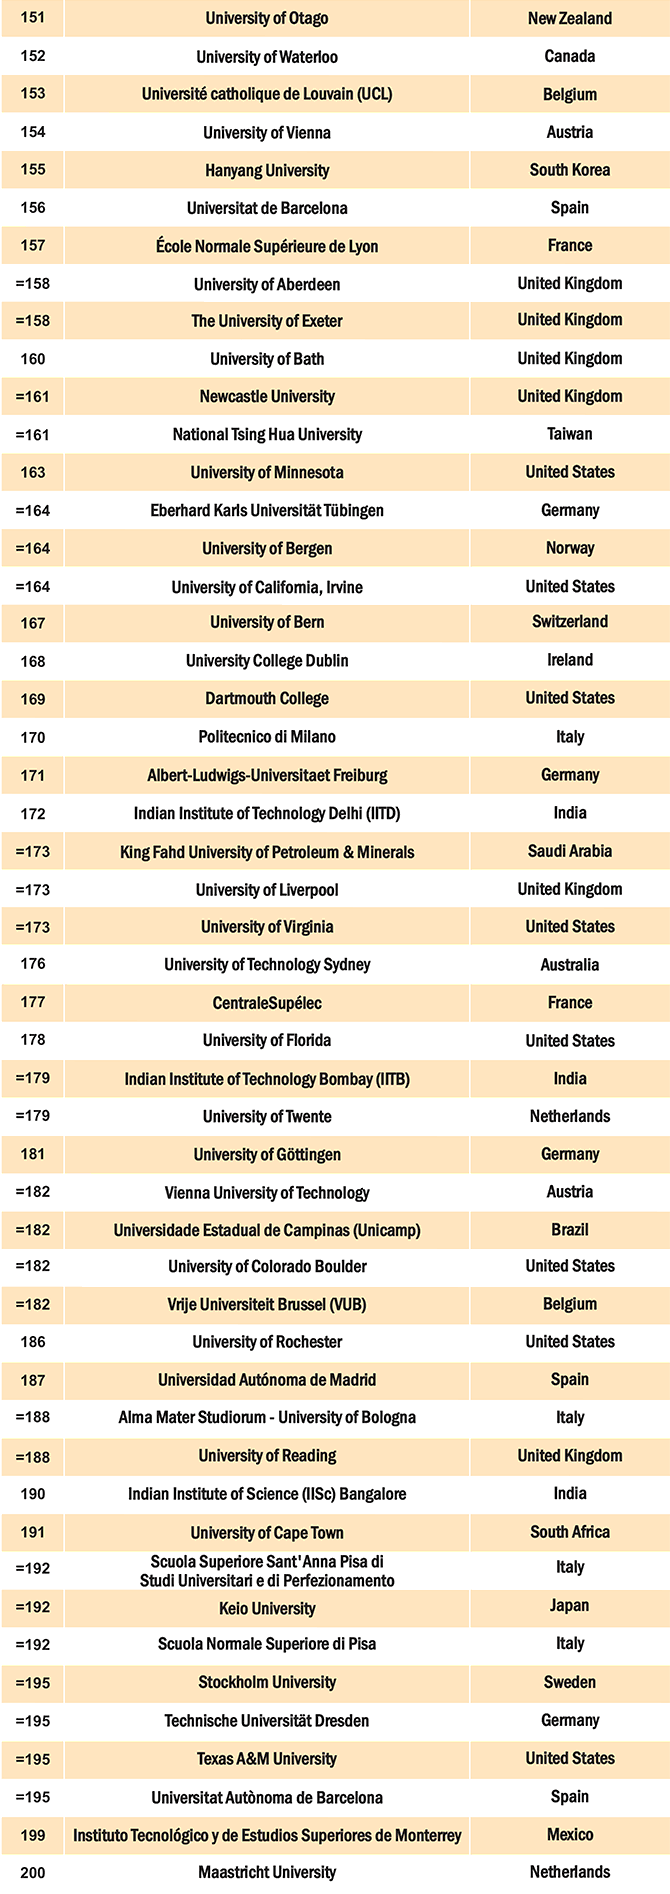 Top universities in the world